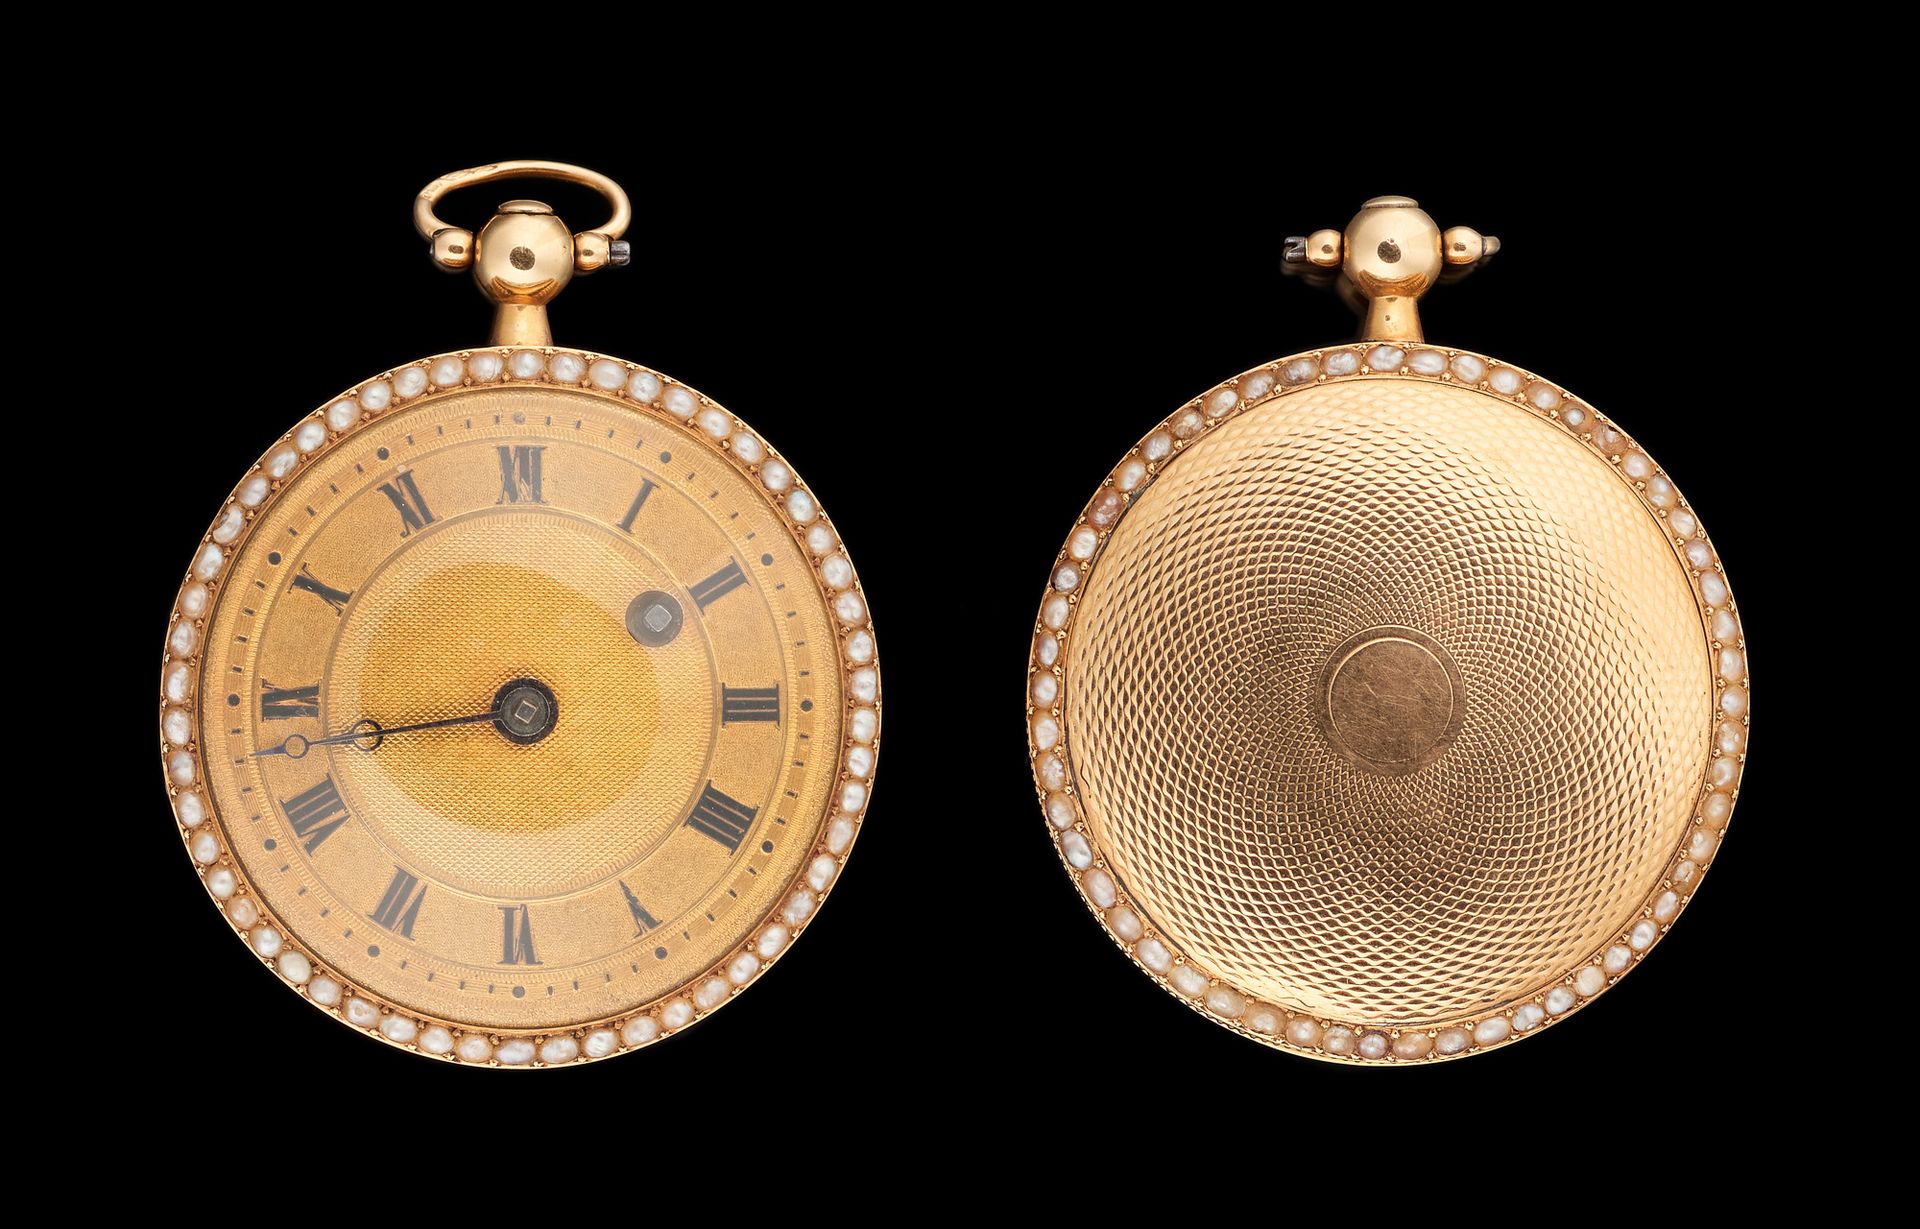 Travail fin 19e. 手表：18克拉的黄金怀表，两侧有珍珠。

附有一把金色的上弦钥匙（已断）。